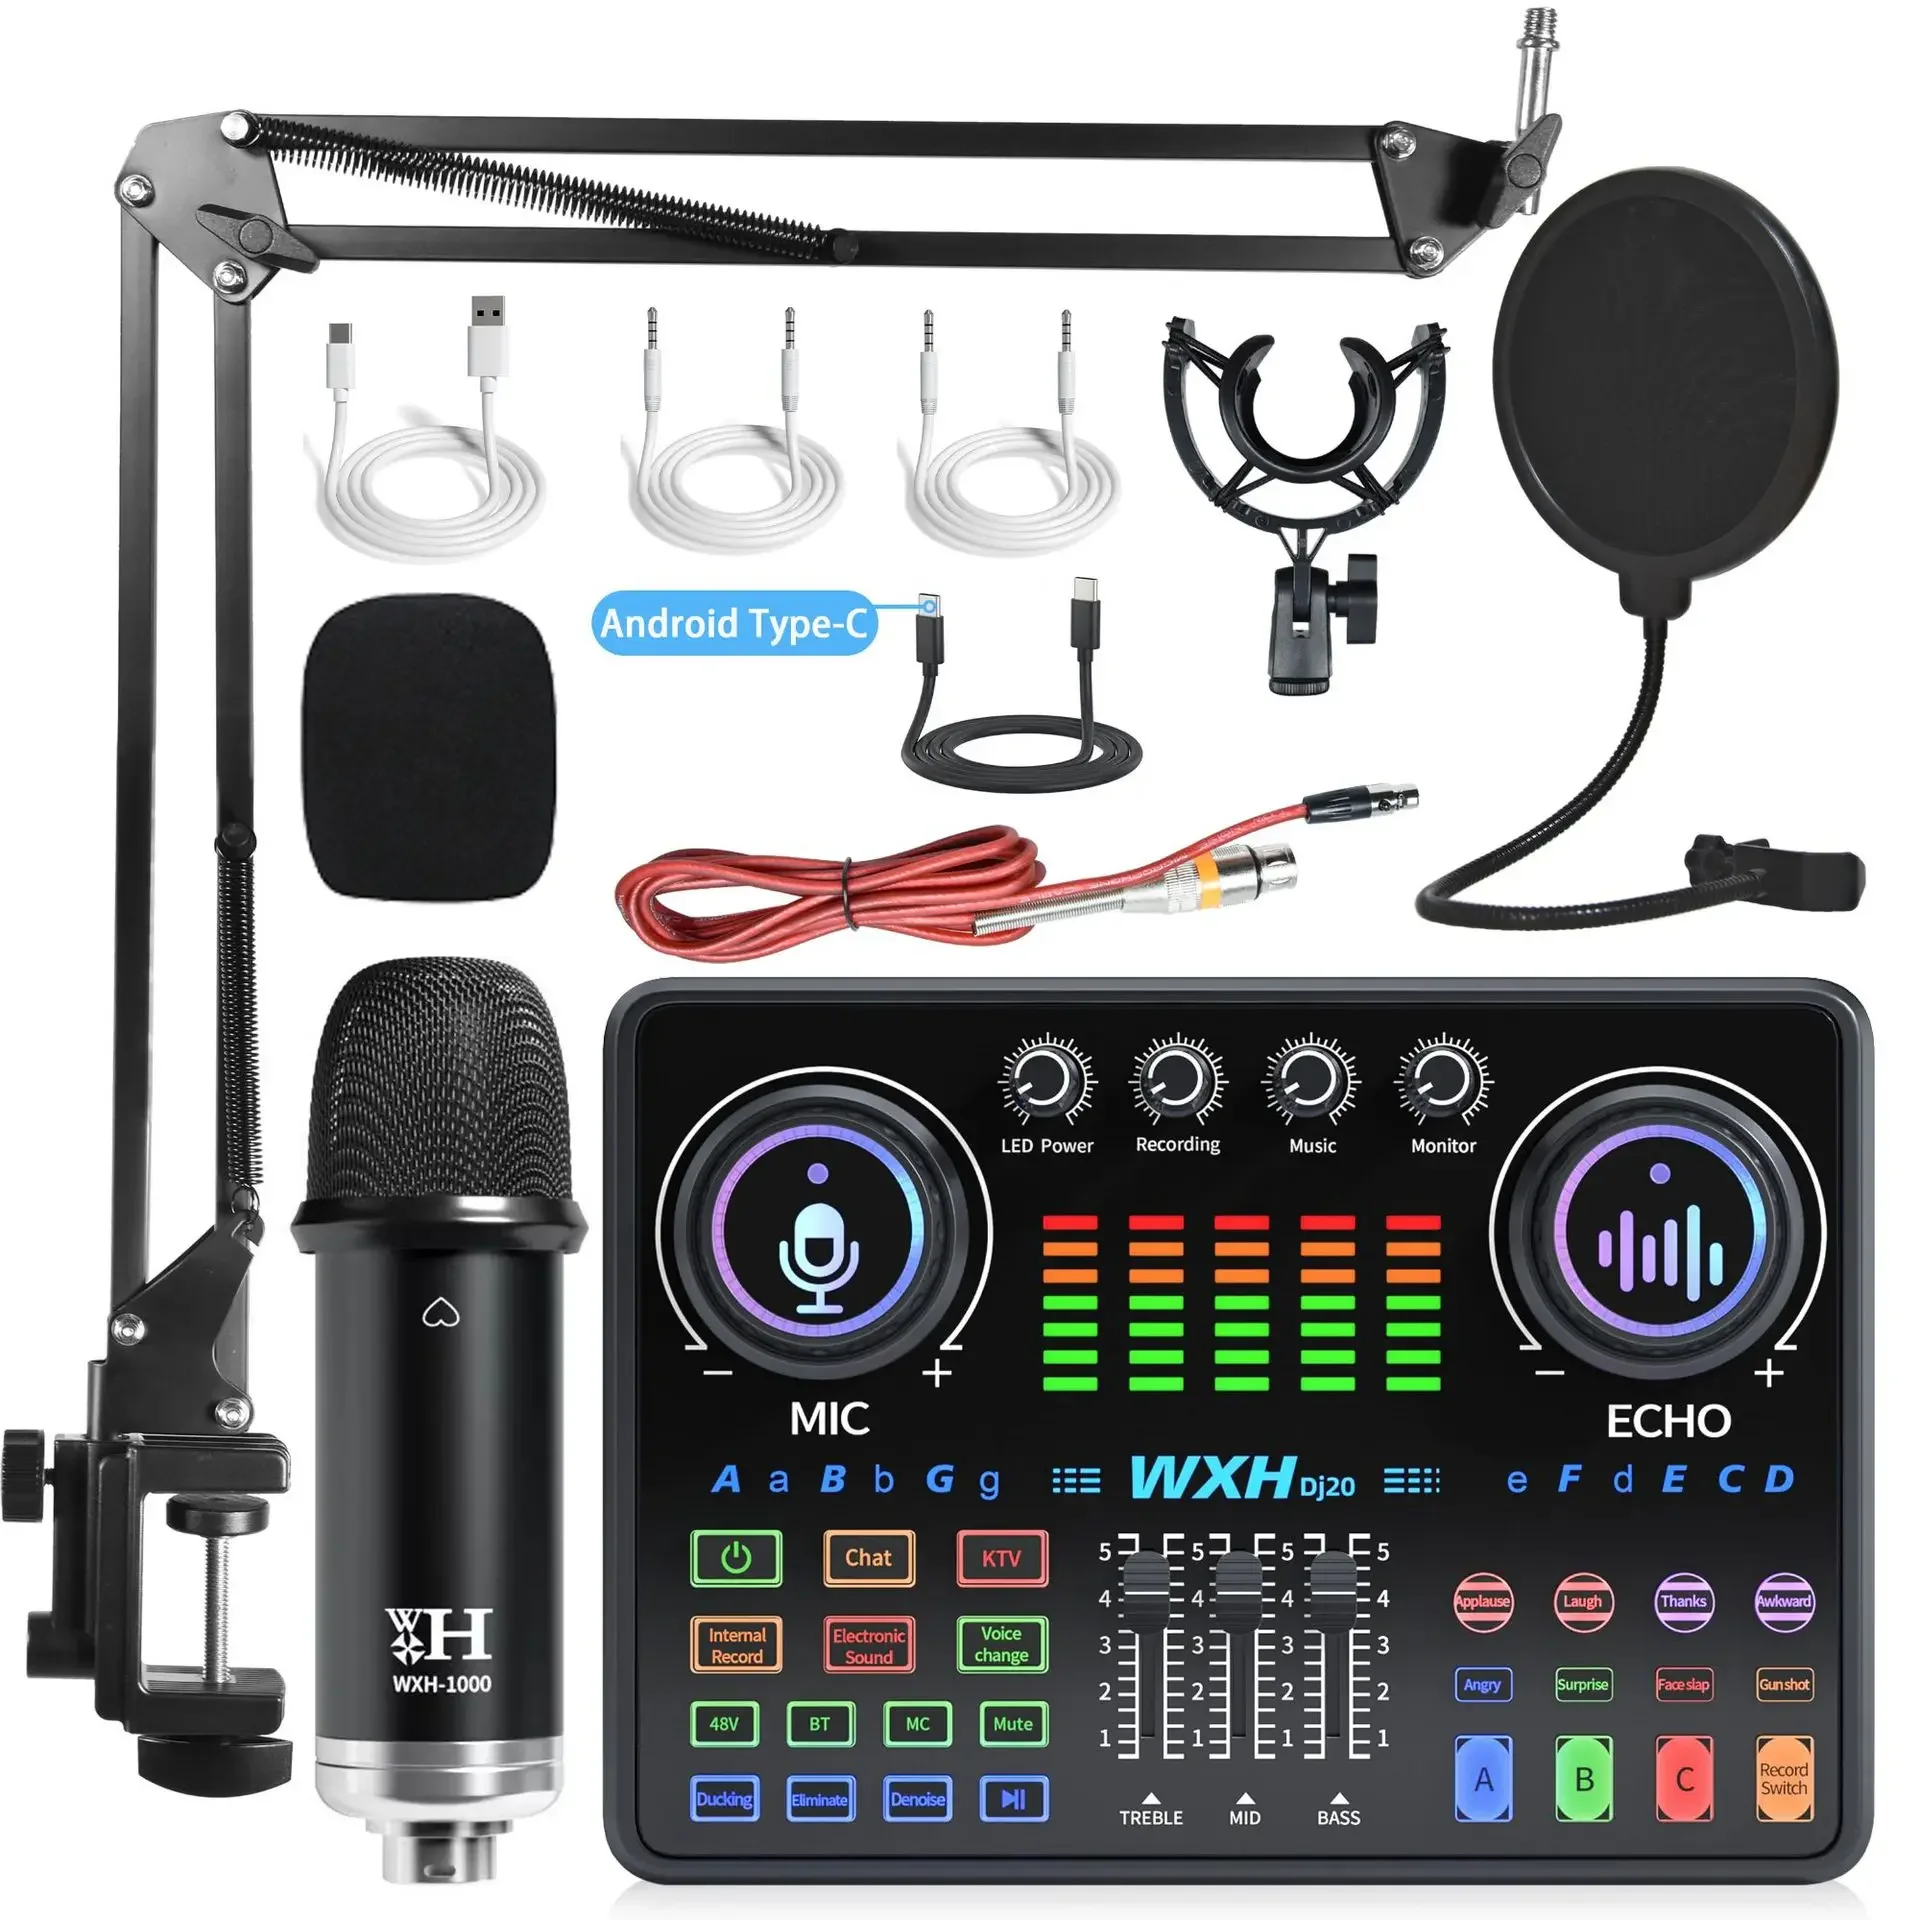 

Dj20 Sound Card Studio Mixer WXH1000 Noise Reduction Microphone Singing Voice Live Broadcast Phone Computer Record USB Sound Set